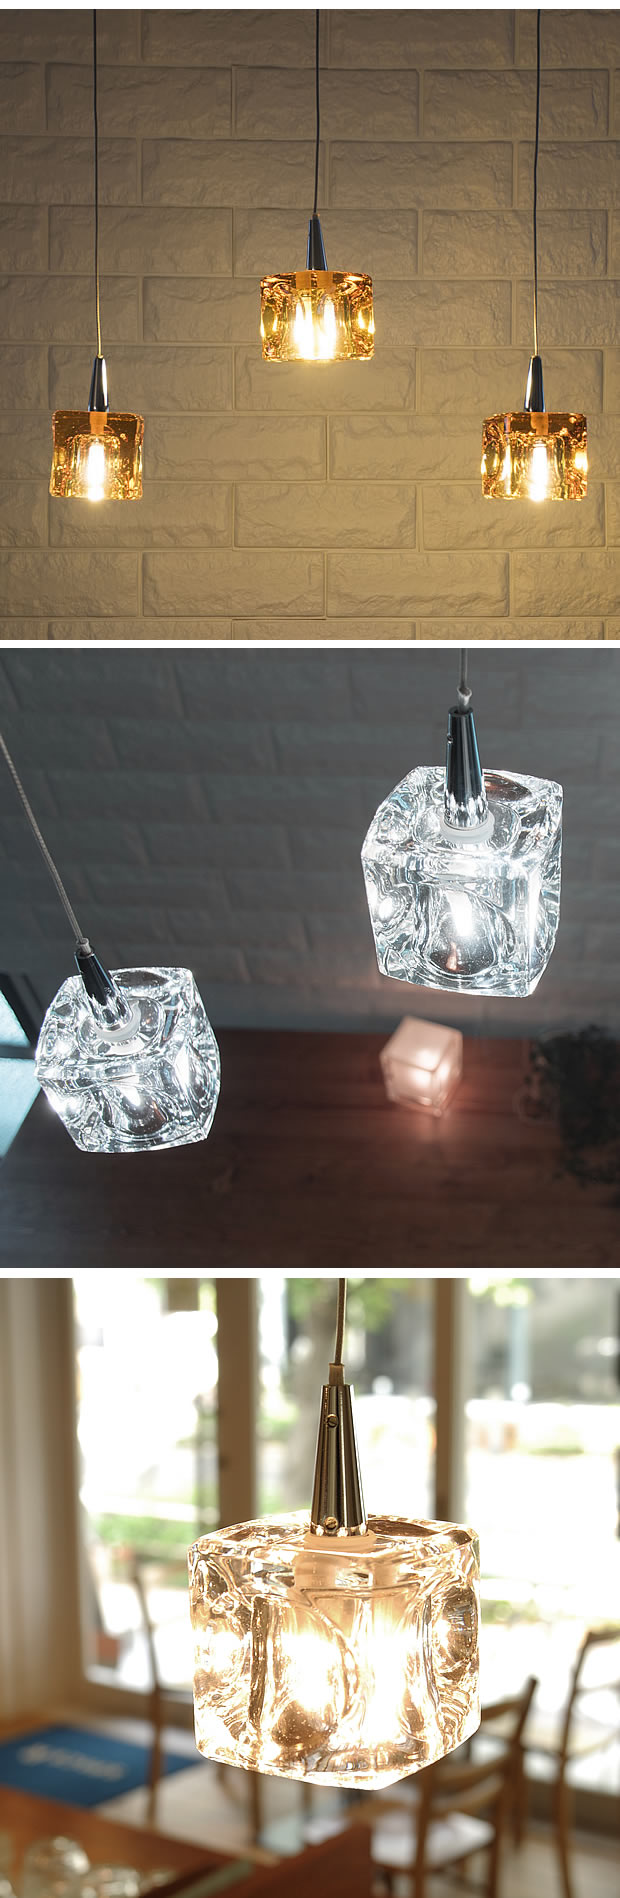 LED ガラス 北欧風 3灯 ペンダントライト cubic キュービック クリア 